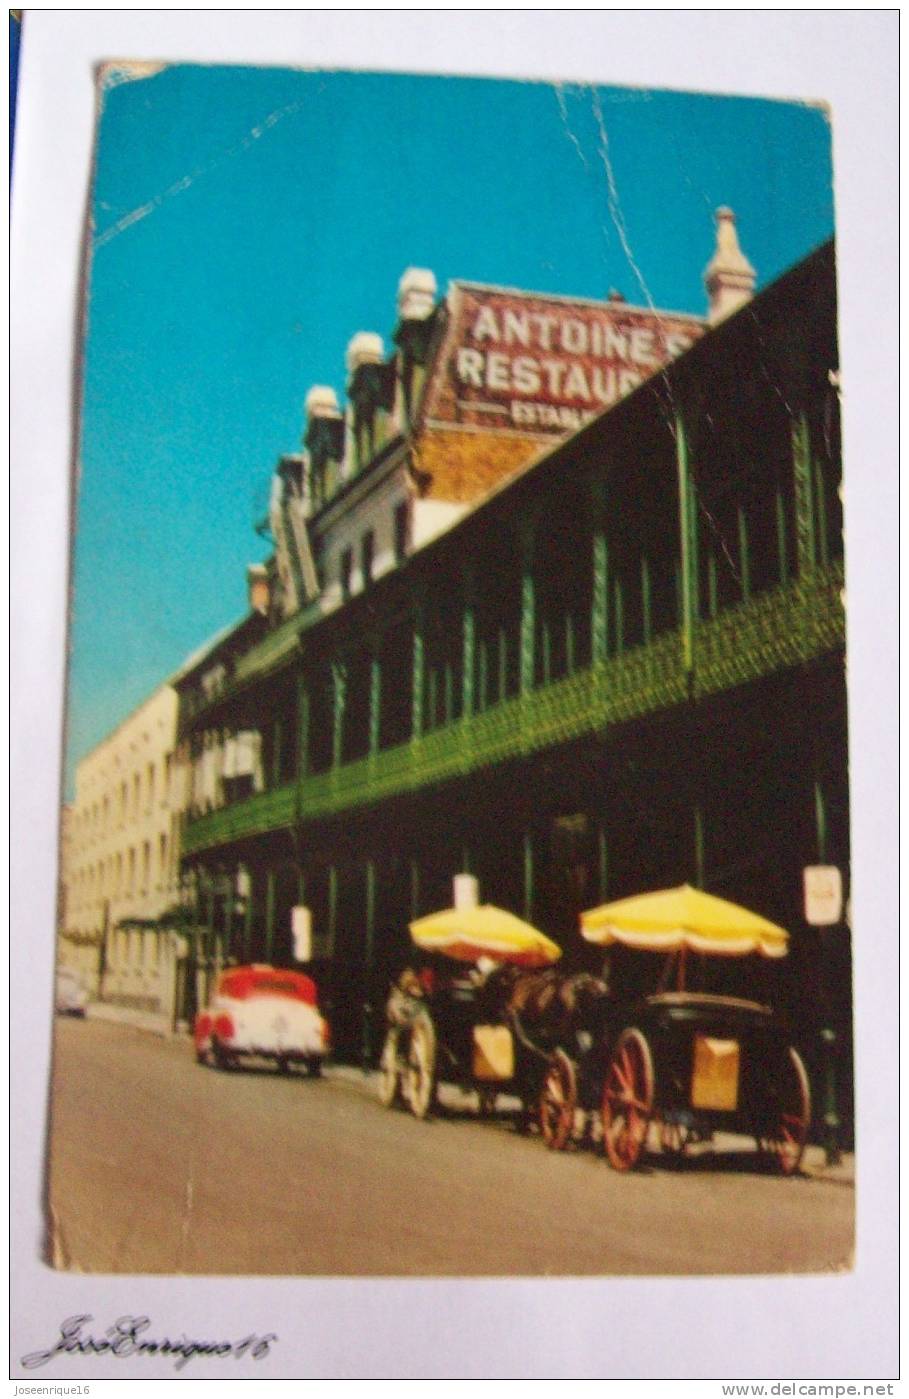 ANTOINE'S RESTAURANT ON ST. LOUIS STREET. NEW ORLEANS LOUISIANA - New Orleans